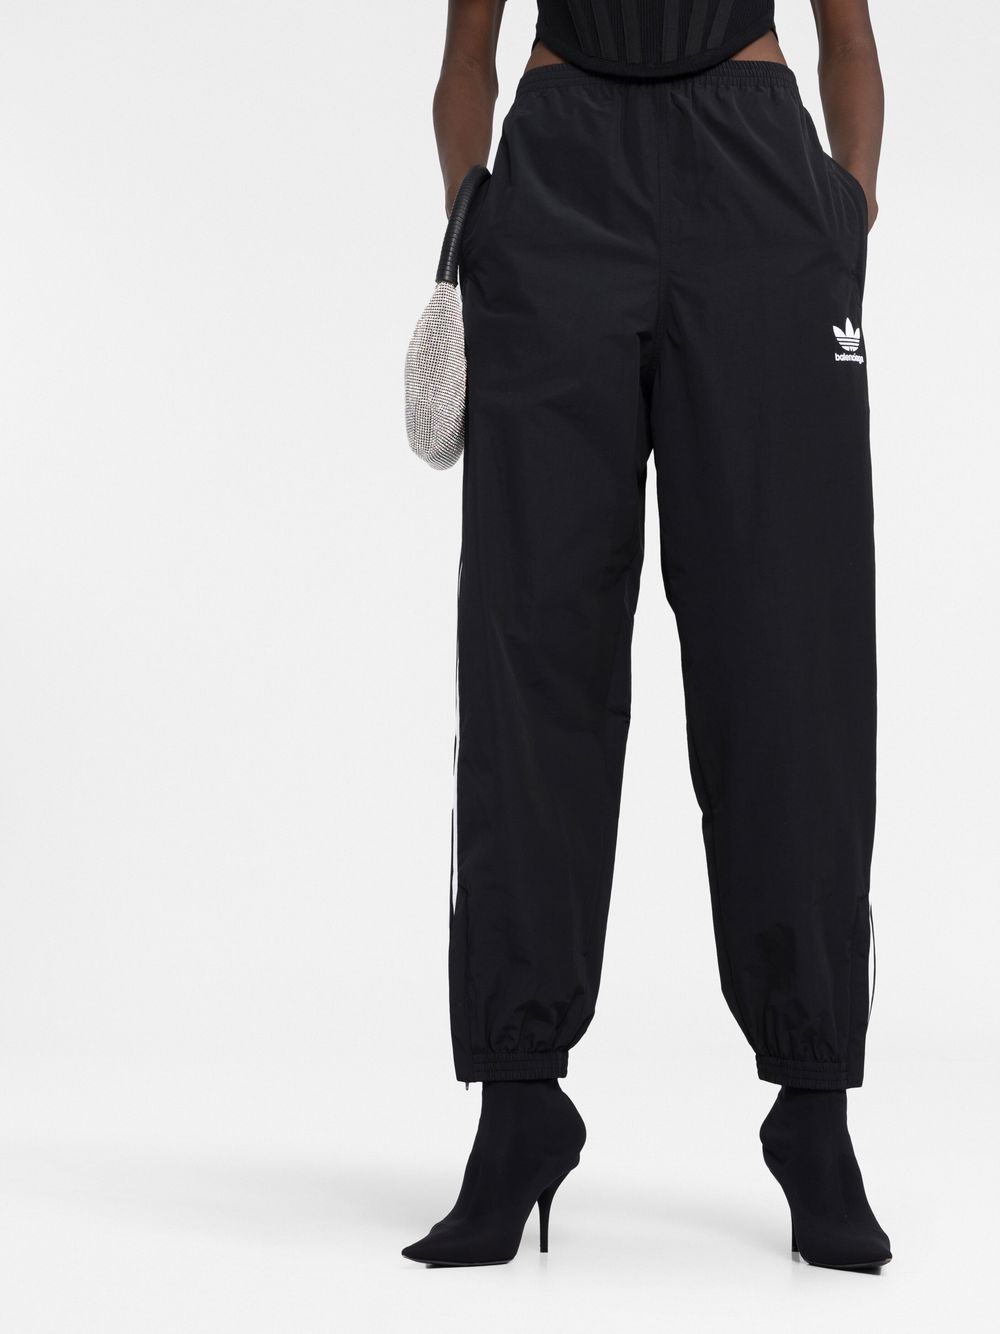 Balenciaga x Adidas side-stripe Cropped Track Pants - Farfetch